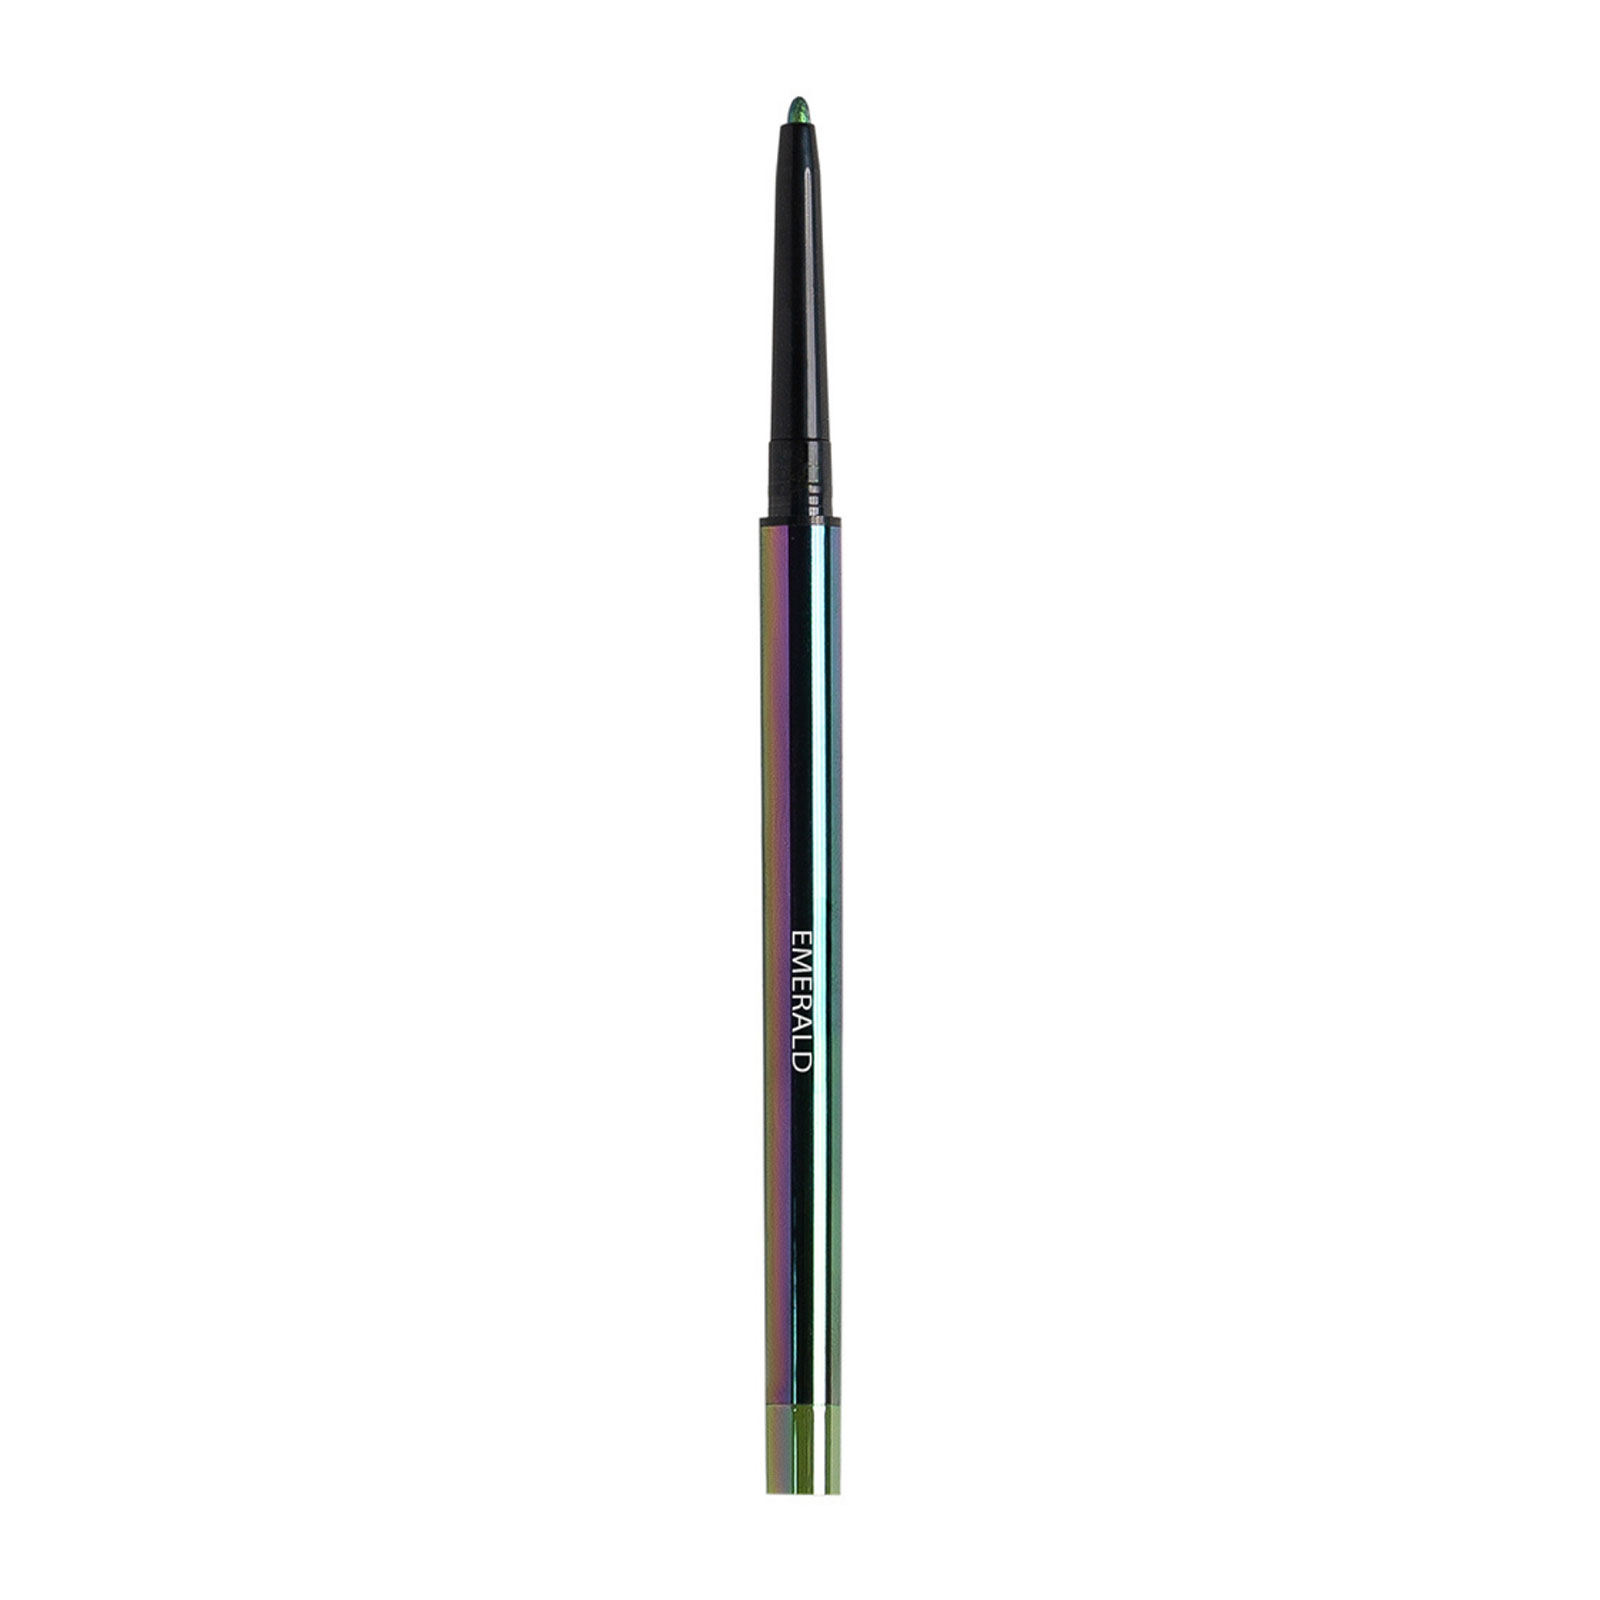 Danessa Myricks Beauty Infinite Chrome Pencil 0.15g Bronzite